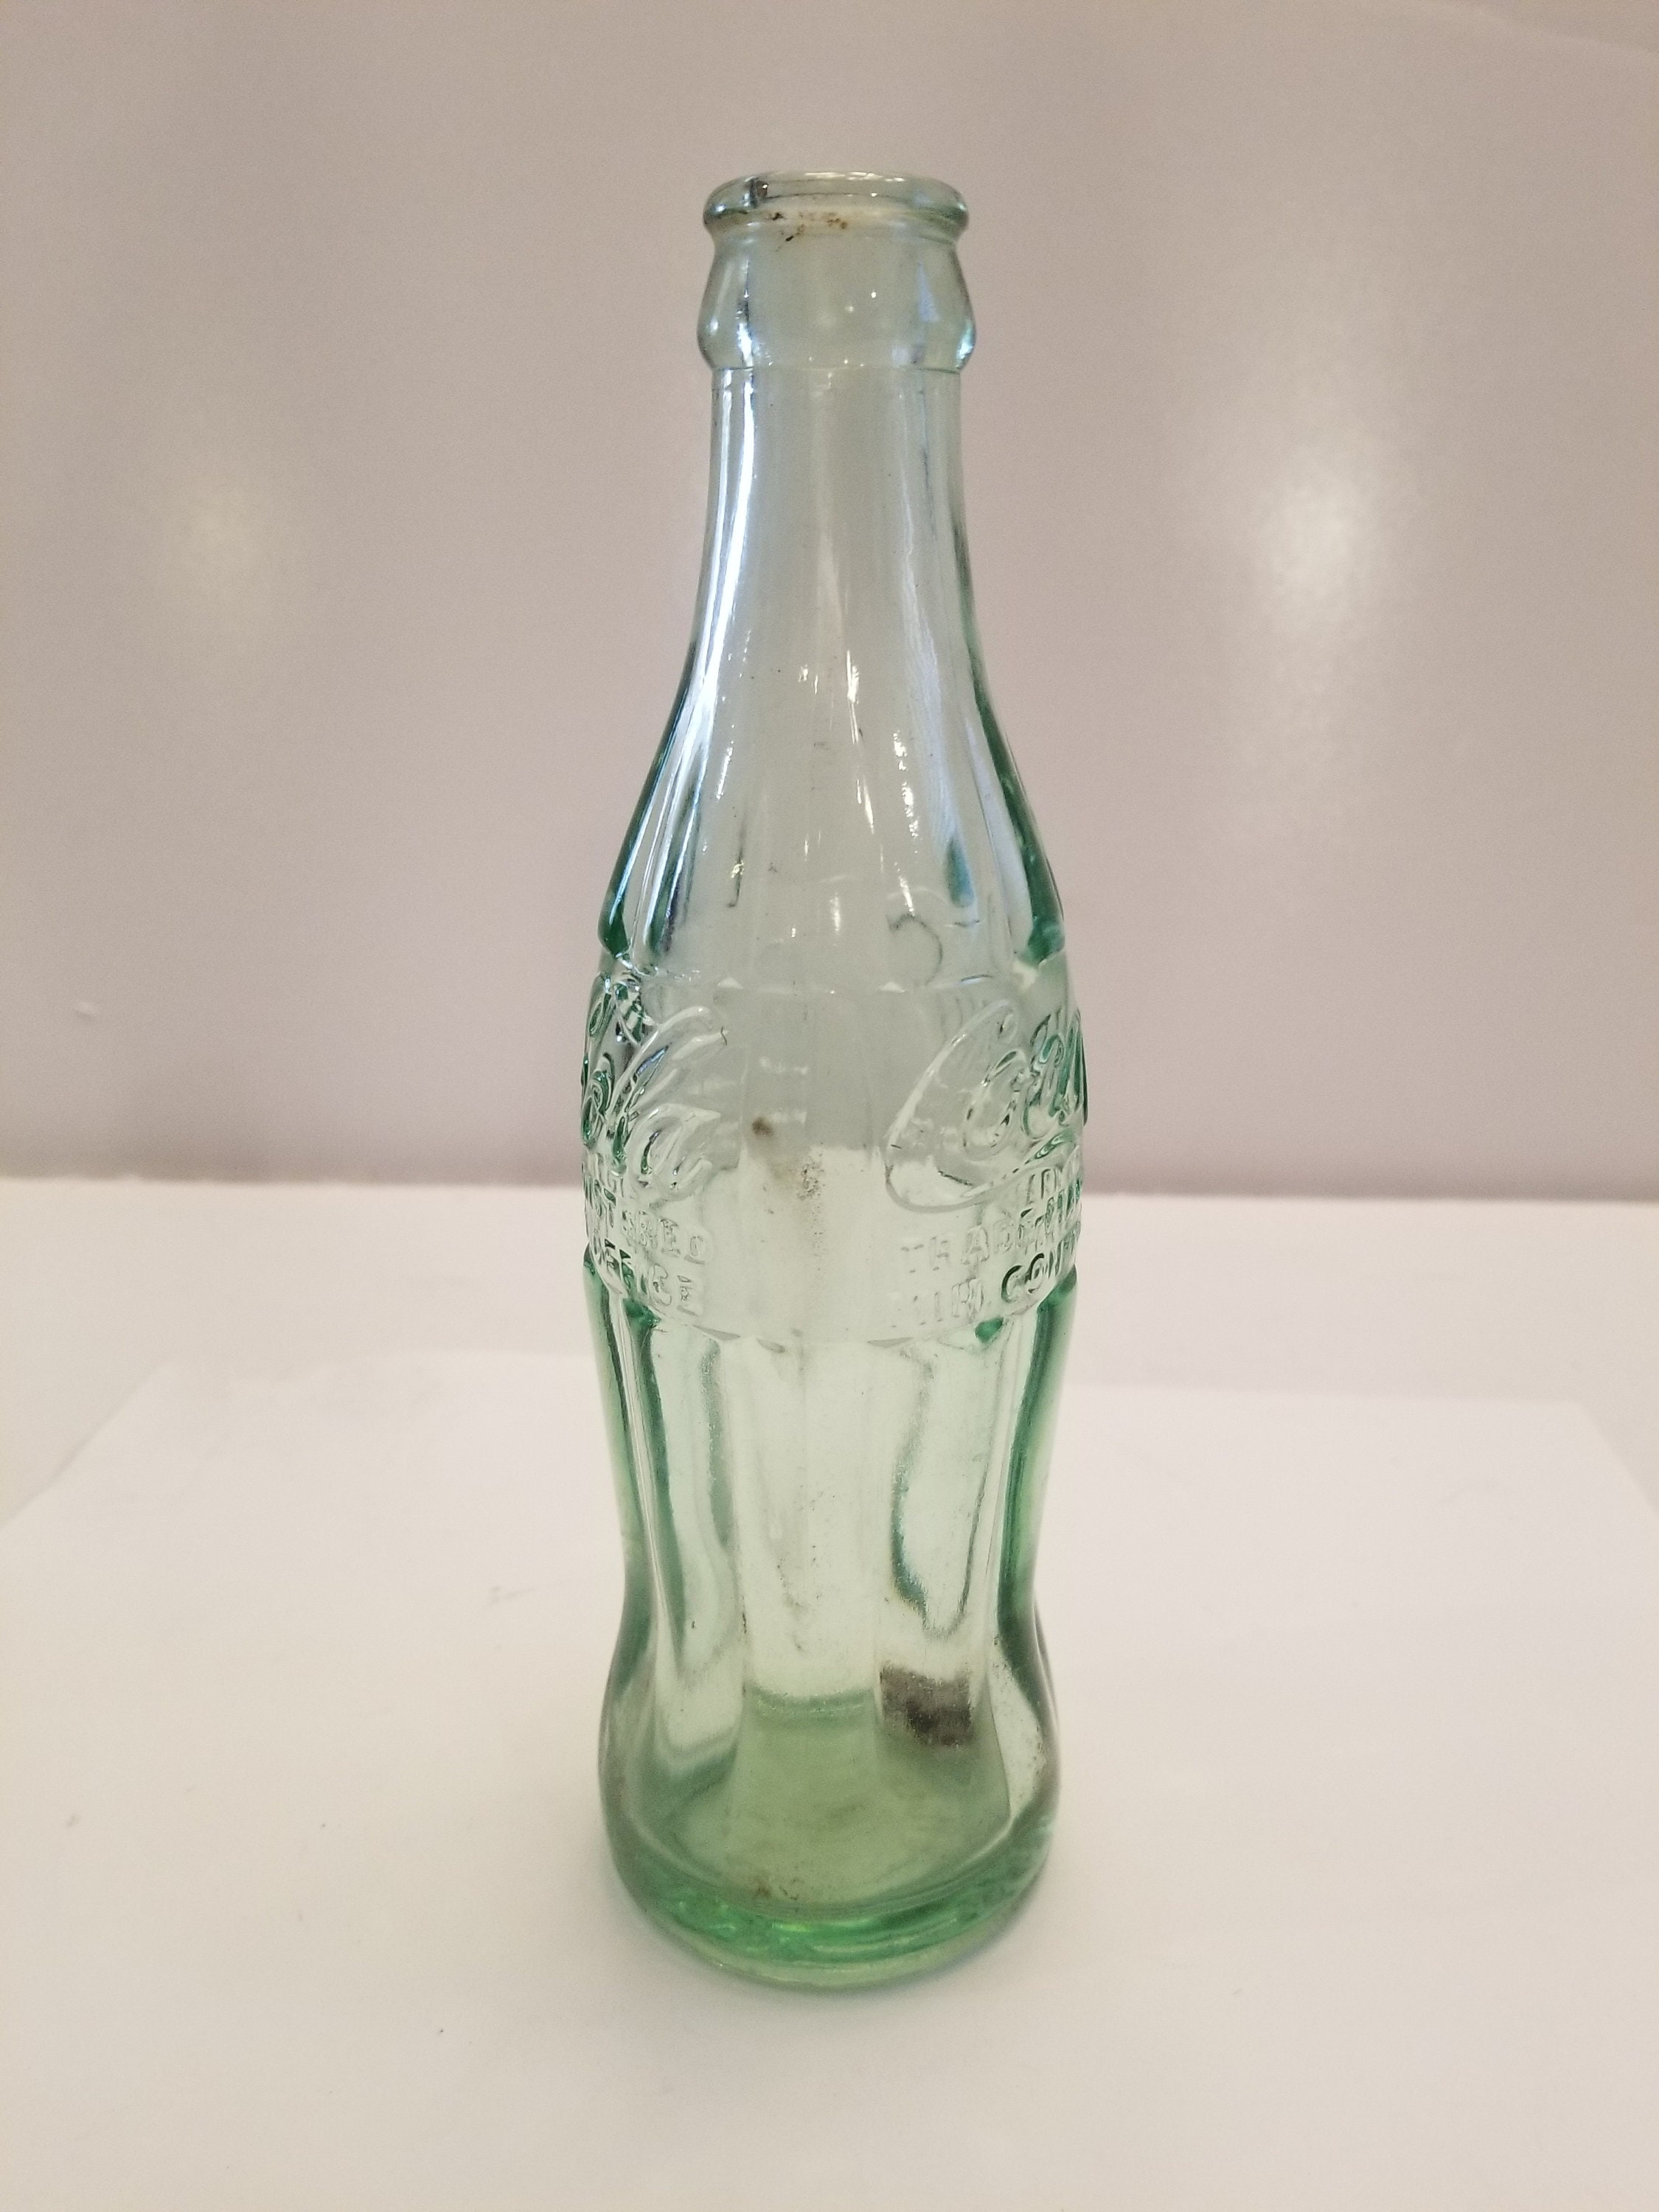 Coca-Cola Bottle - 8 oz Dimensions & Drawings